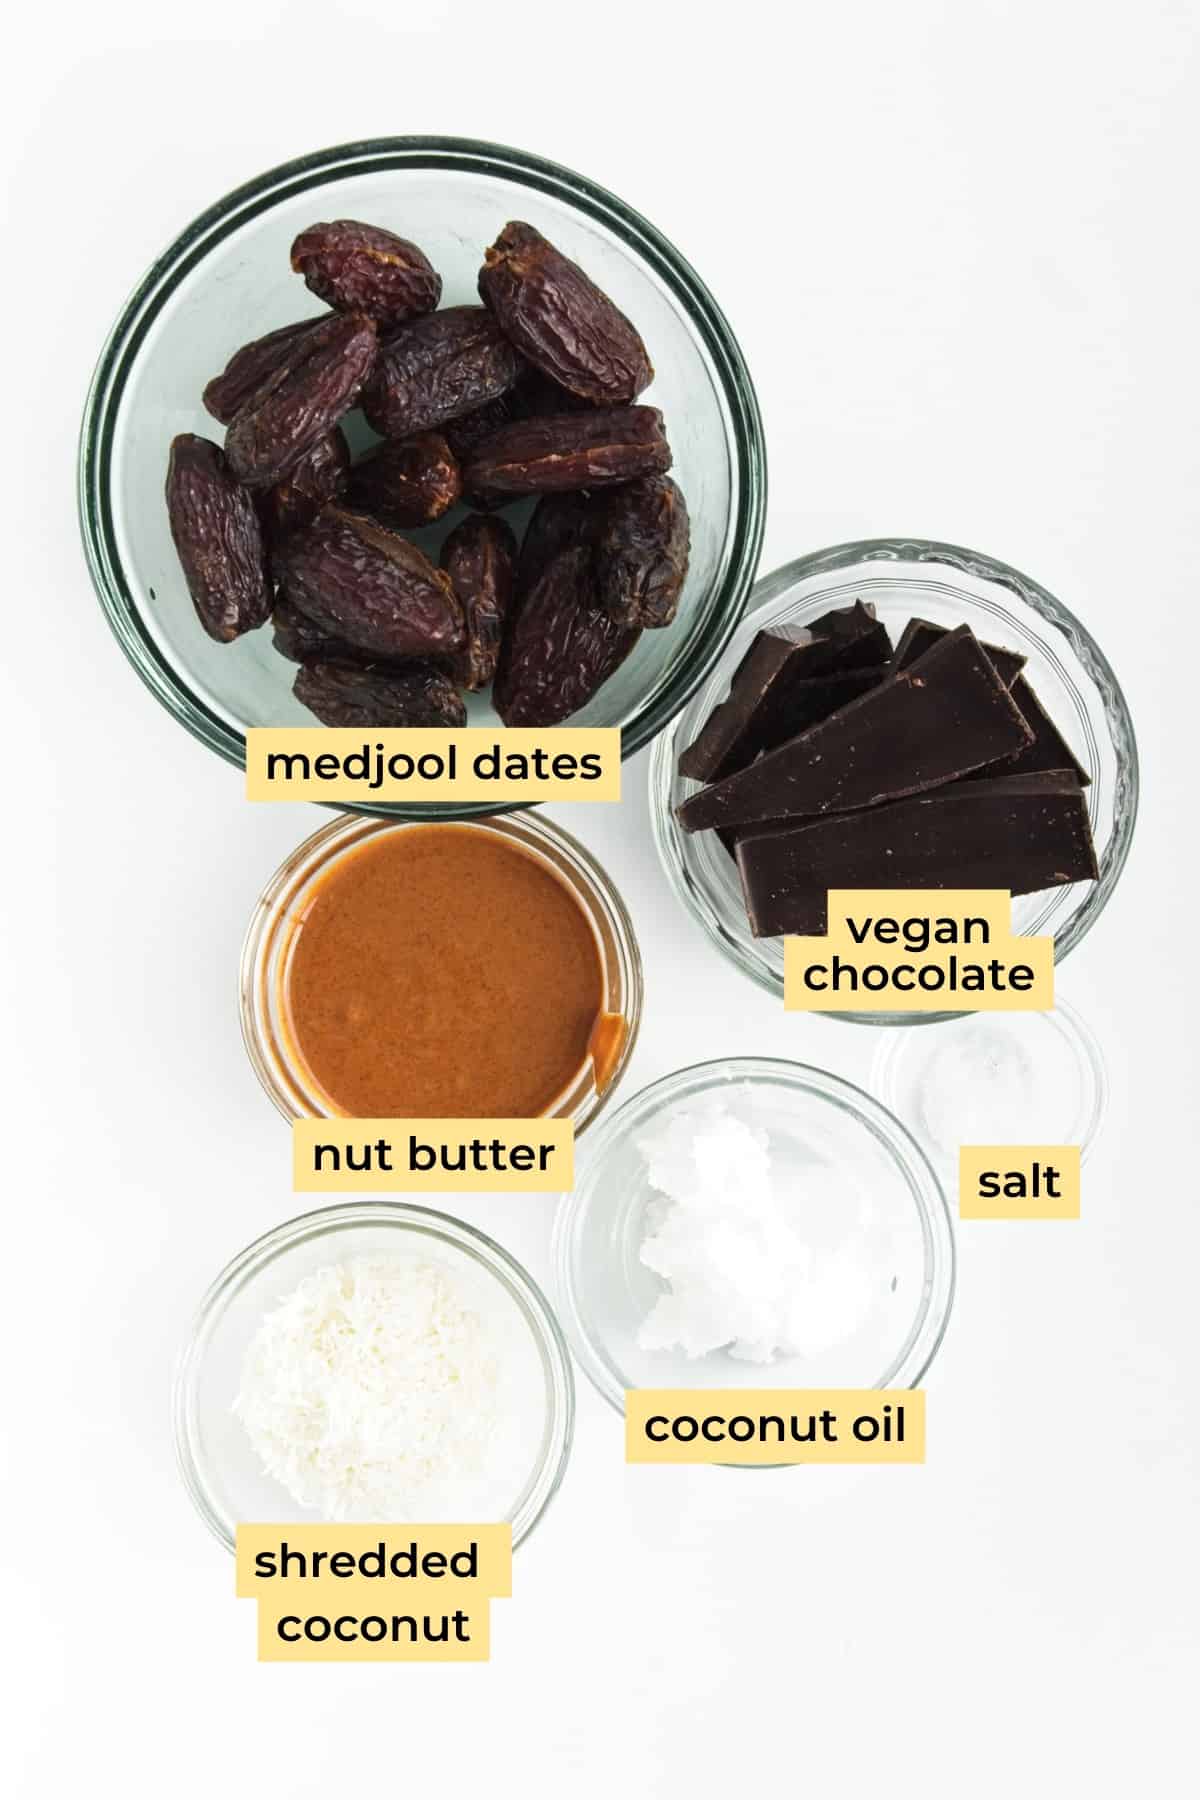 Ingredients: medjool dates, vegan chocolate, nut butter, salt, coconut oil and shredded coconut.